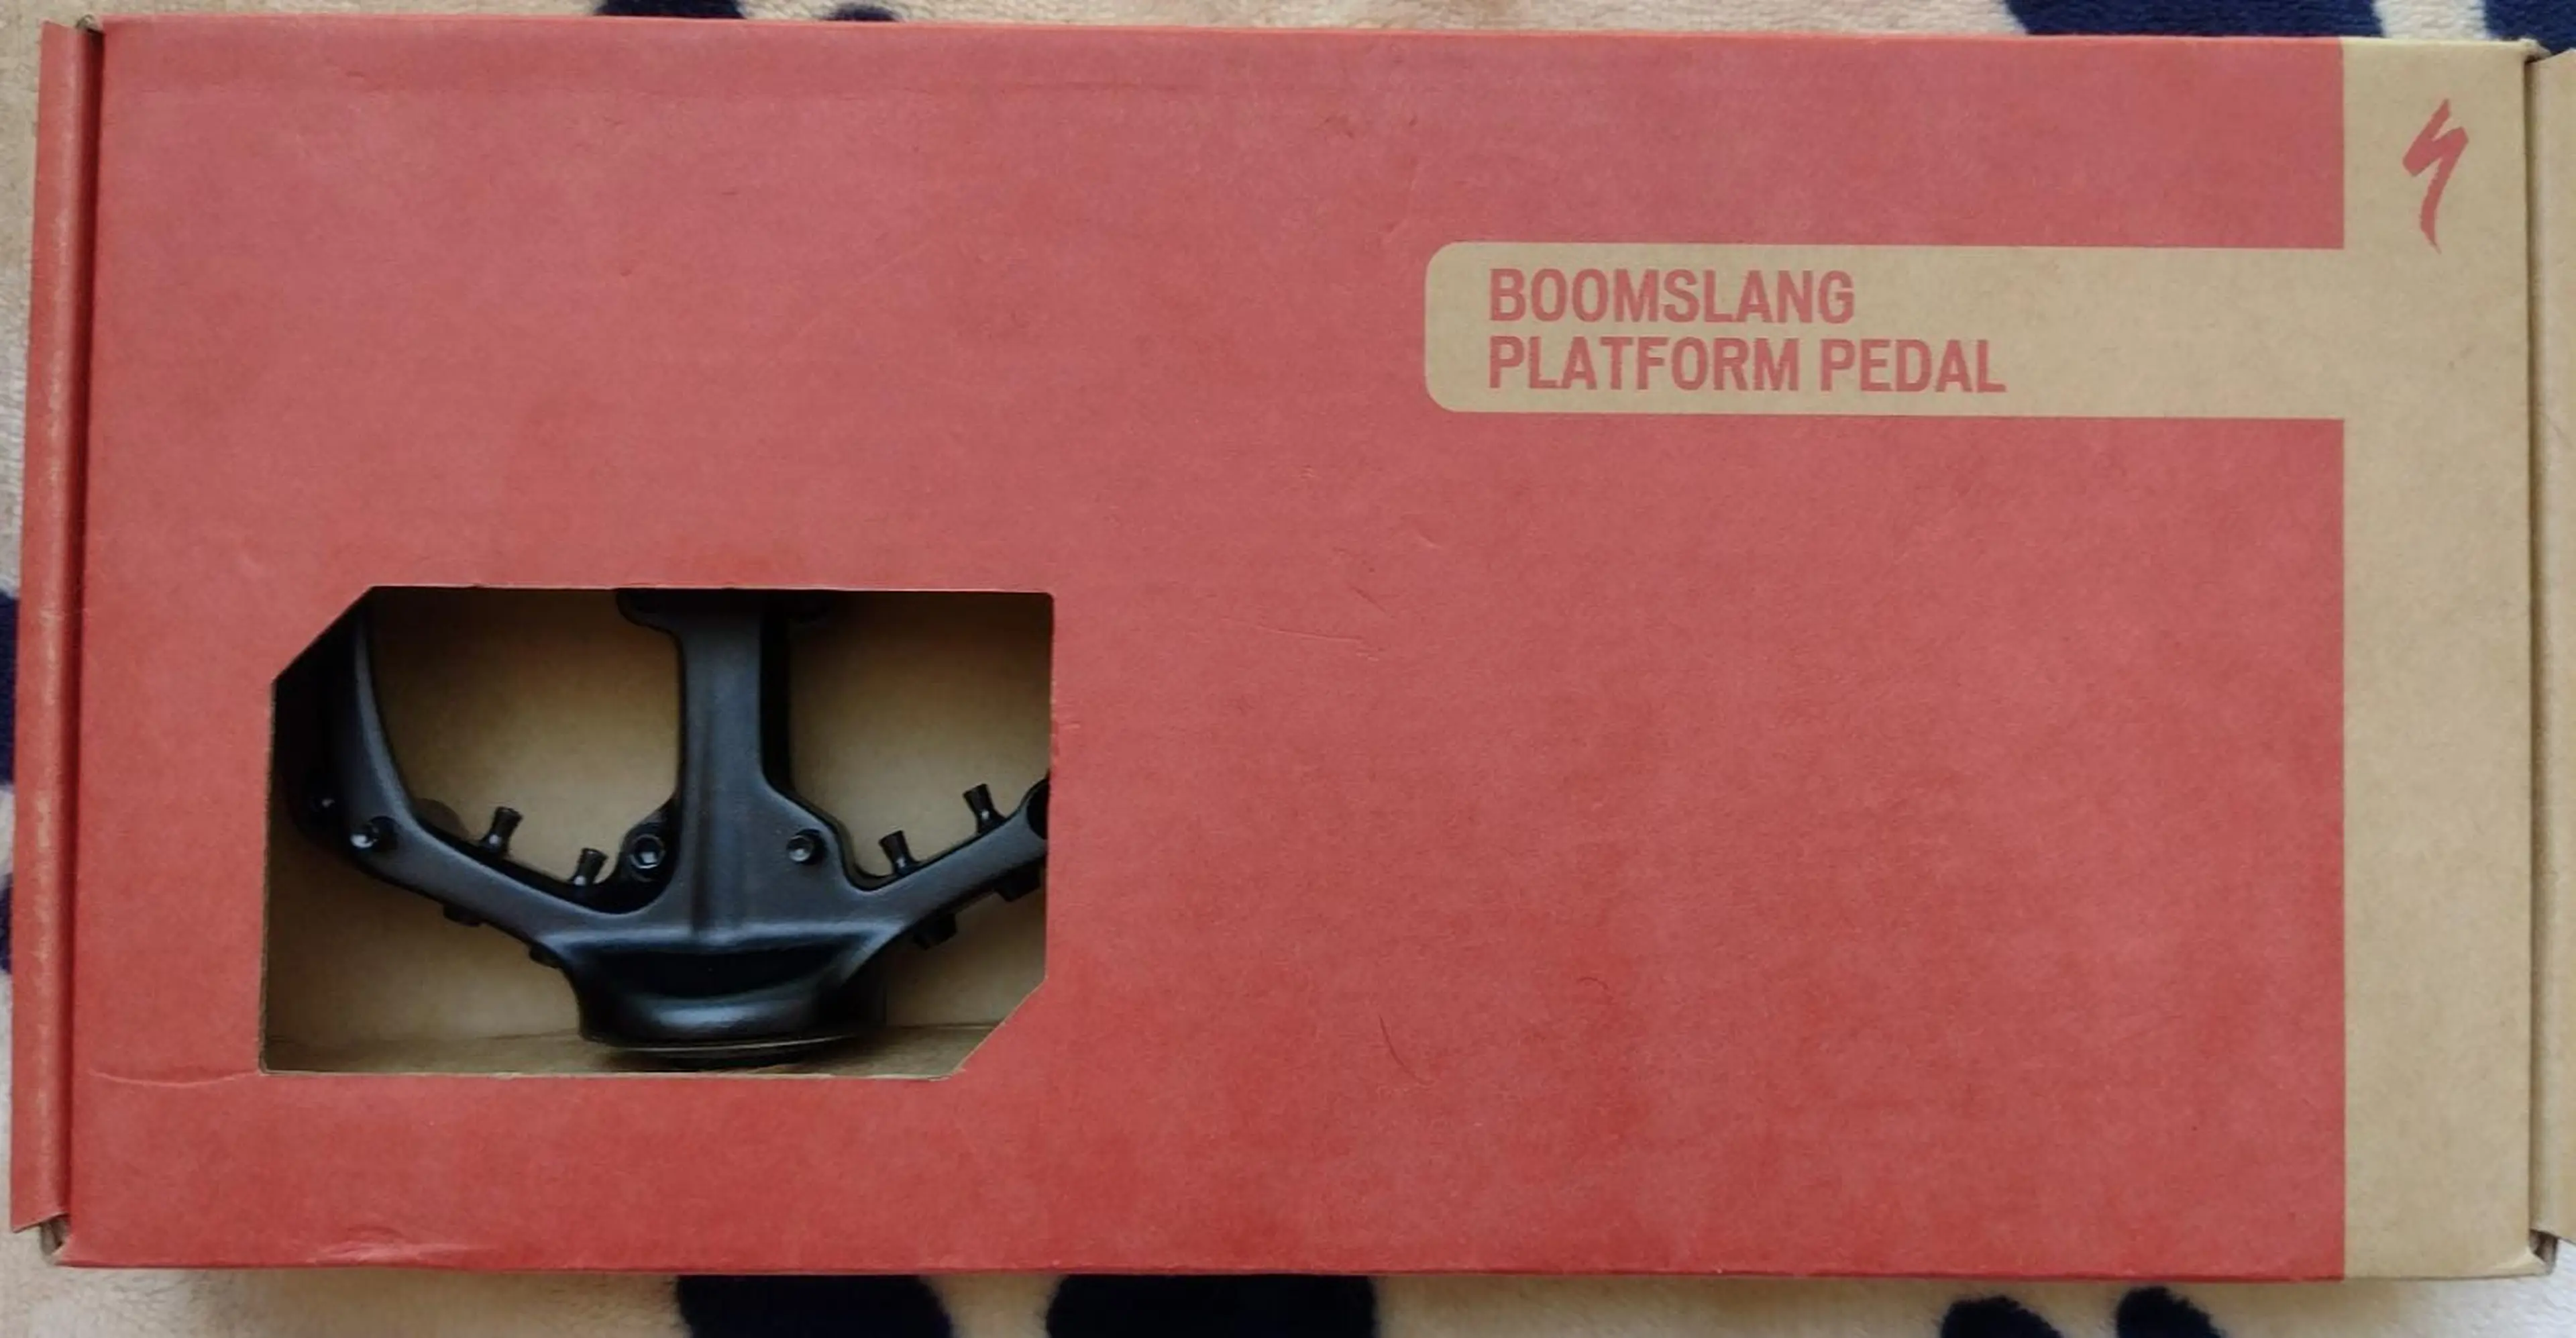 2. Pedale Specialized Boomslang Platform Pedal